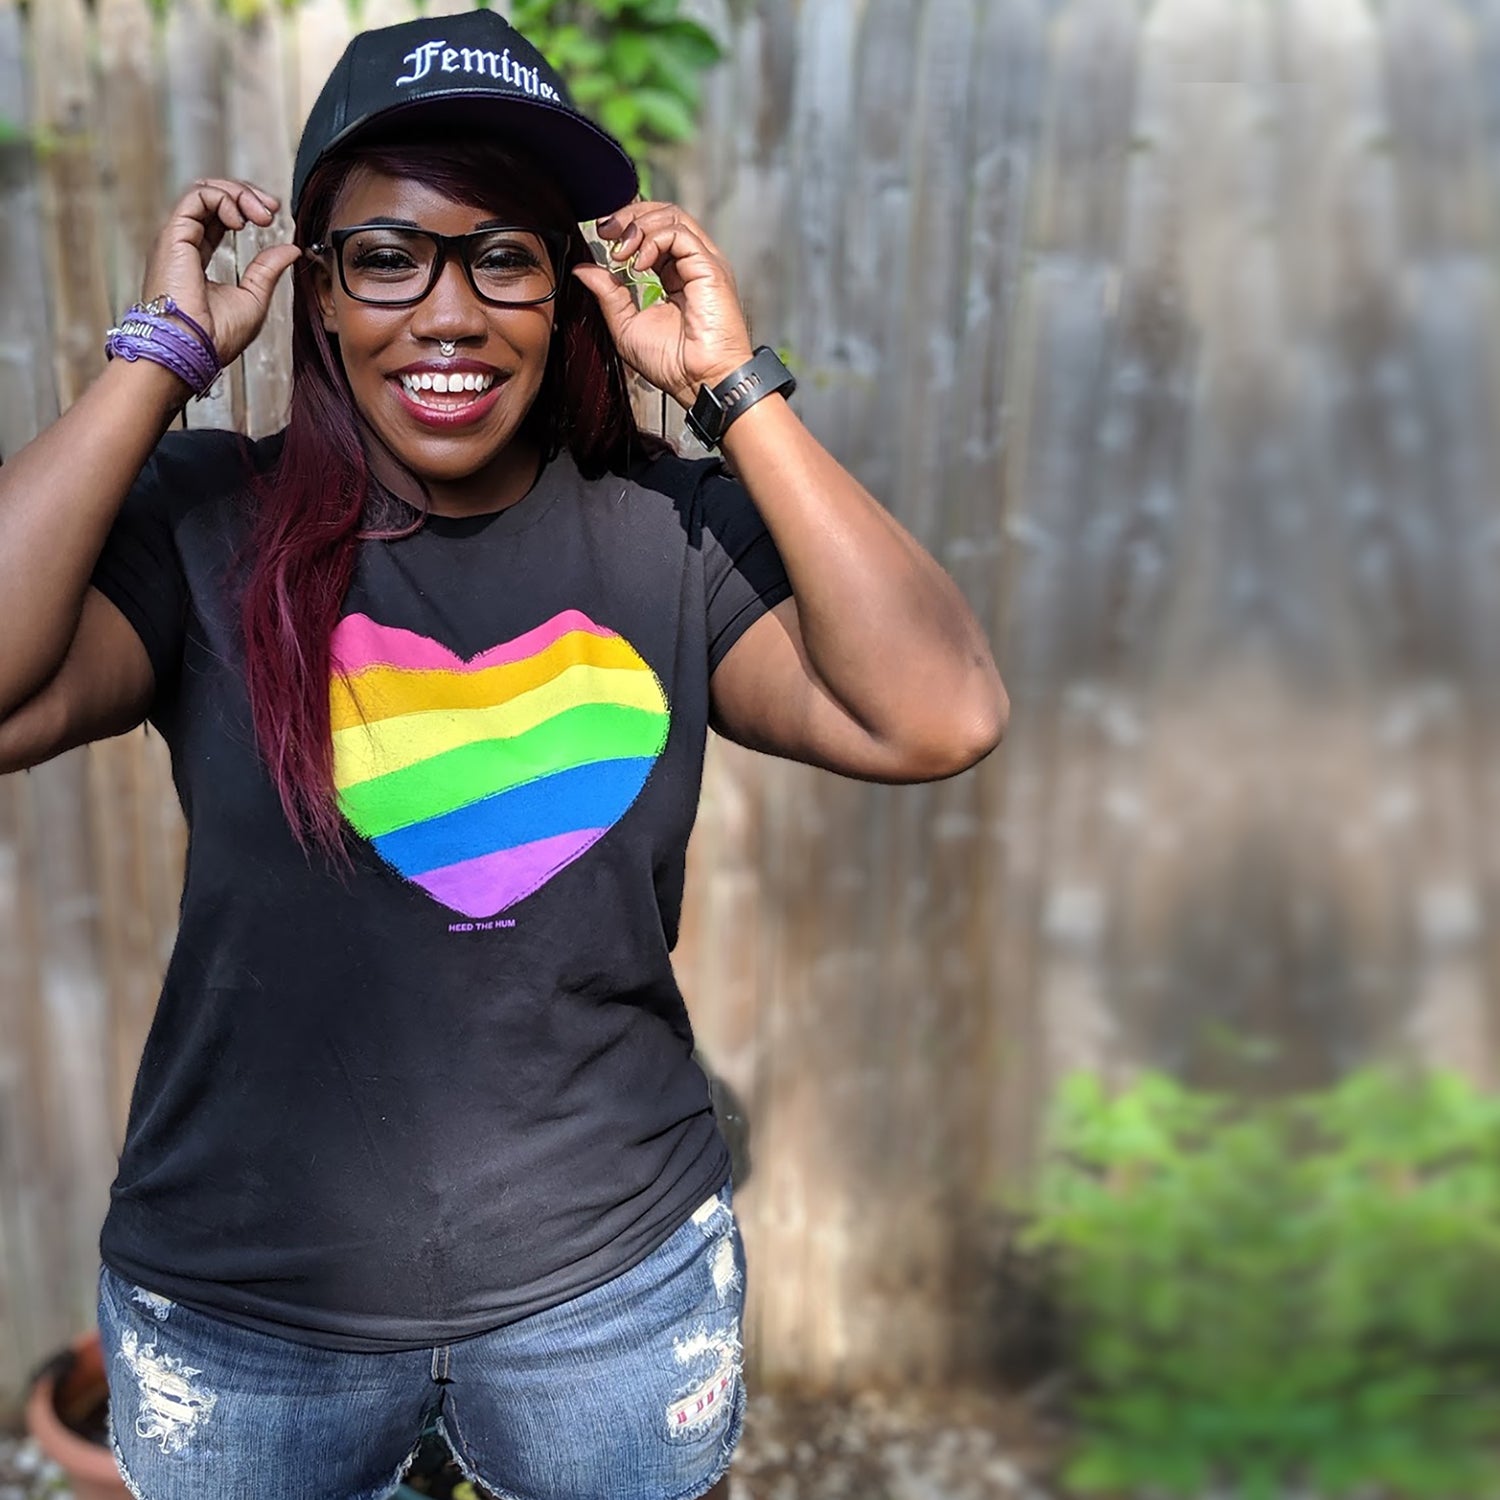 Rainbow Heart Black Unisex T-shirt - LGBTQ Queer Gay Pride, Shirt, HEED THE HUM